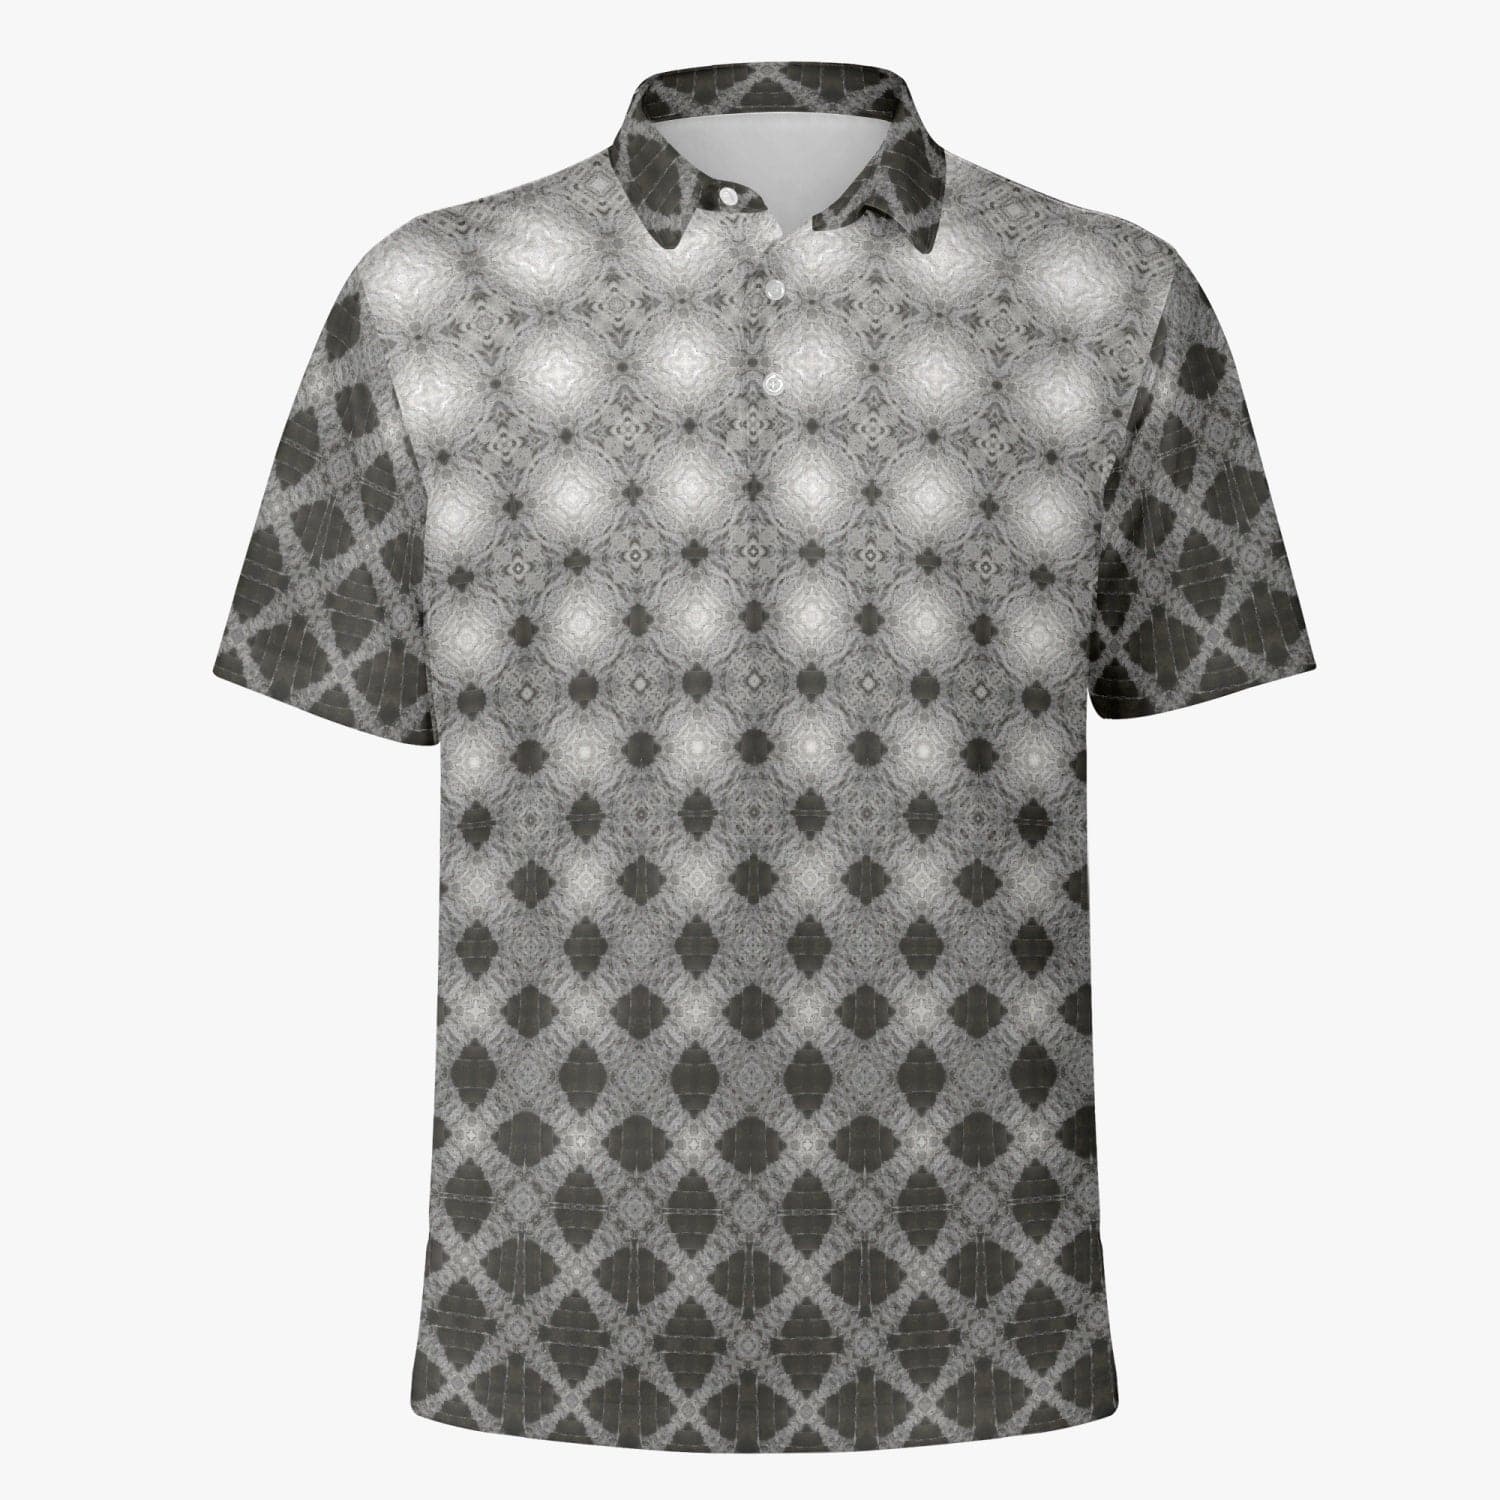 Moon and black night pattern  Handmade  Men Polo Shirt for men, by Sensus Studio Design